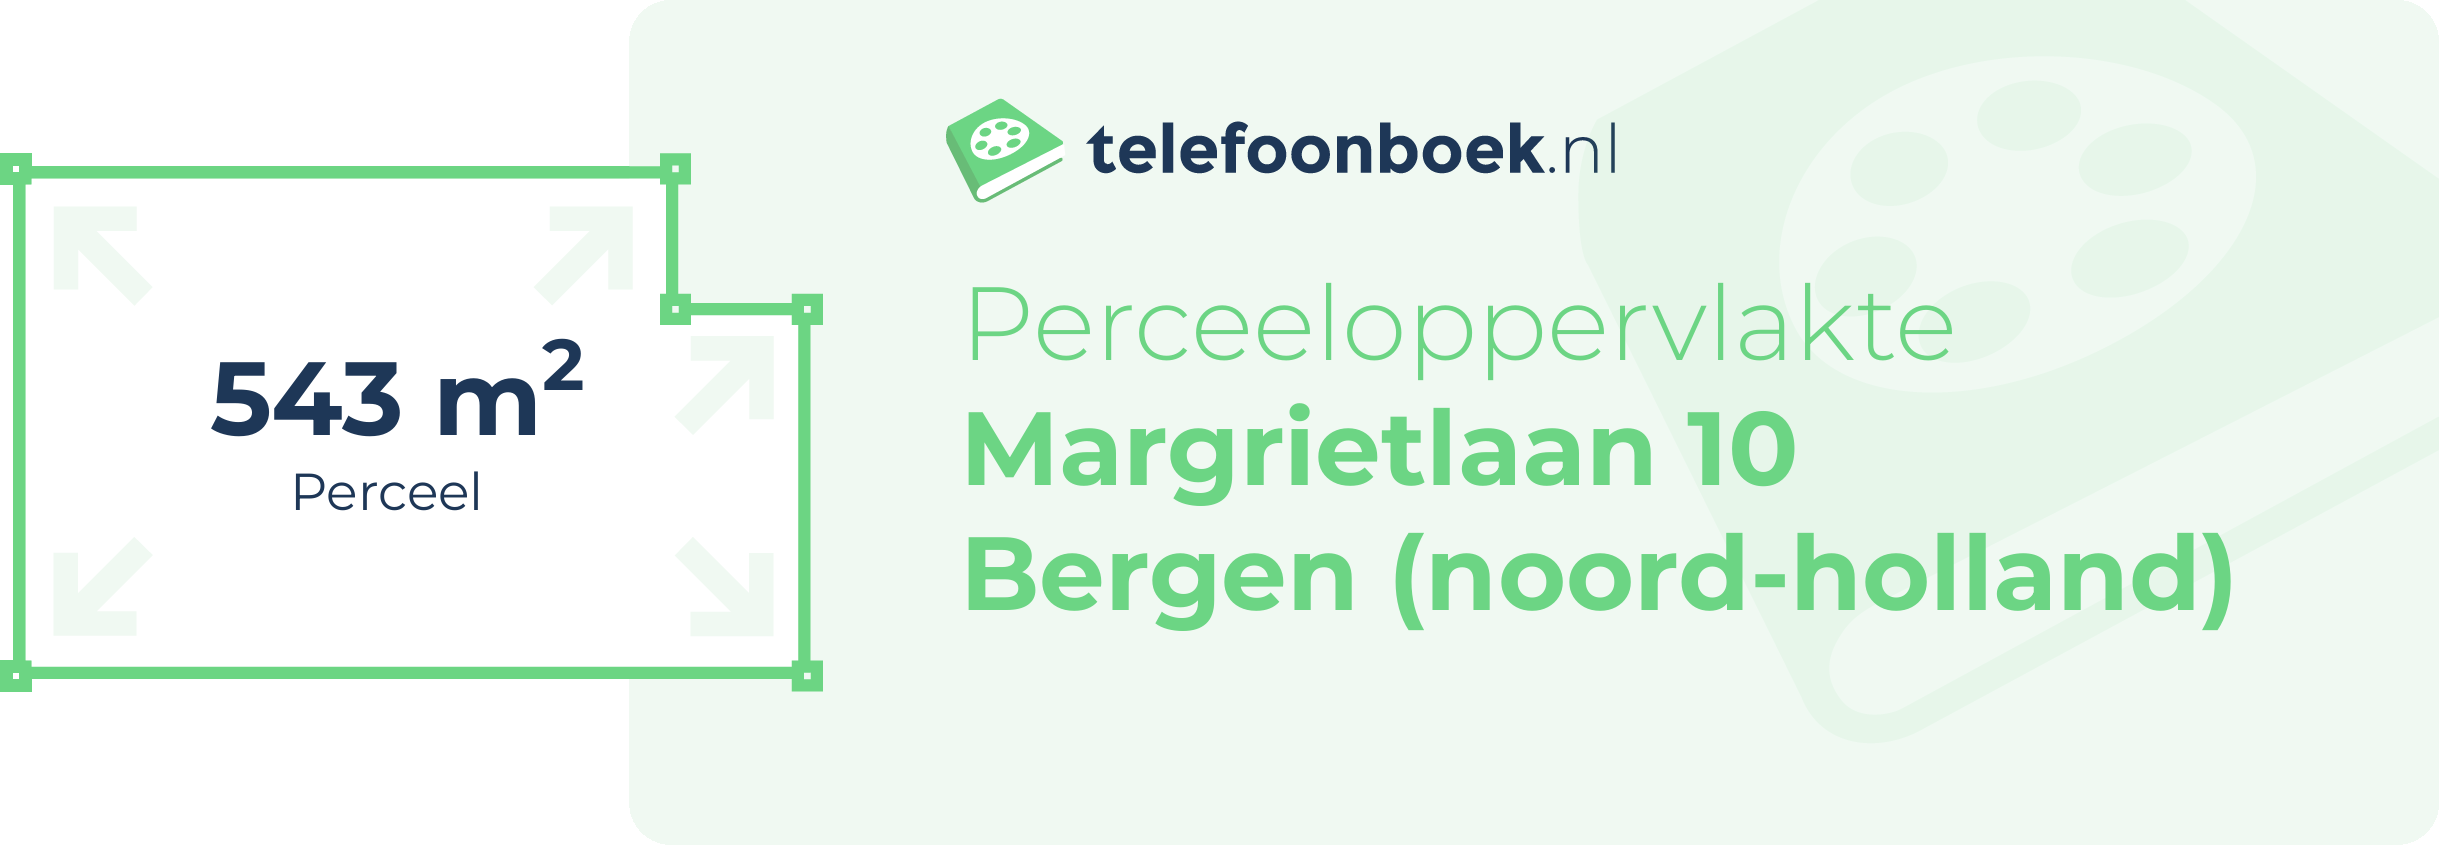 Perceeloppervlakte Margrietlaan 10 Bergen (Noord-Holland)